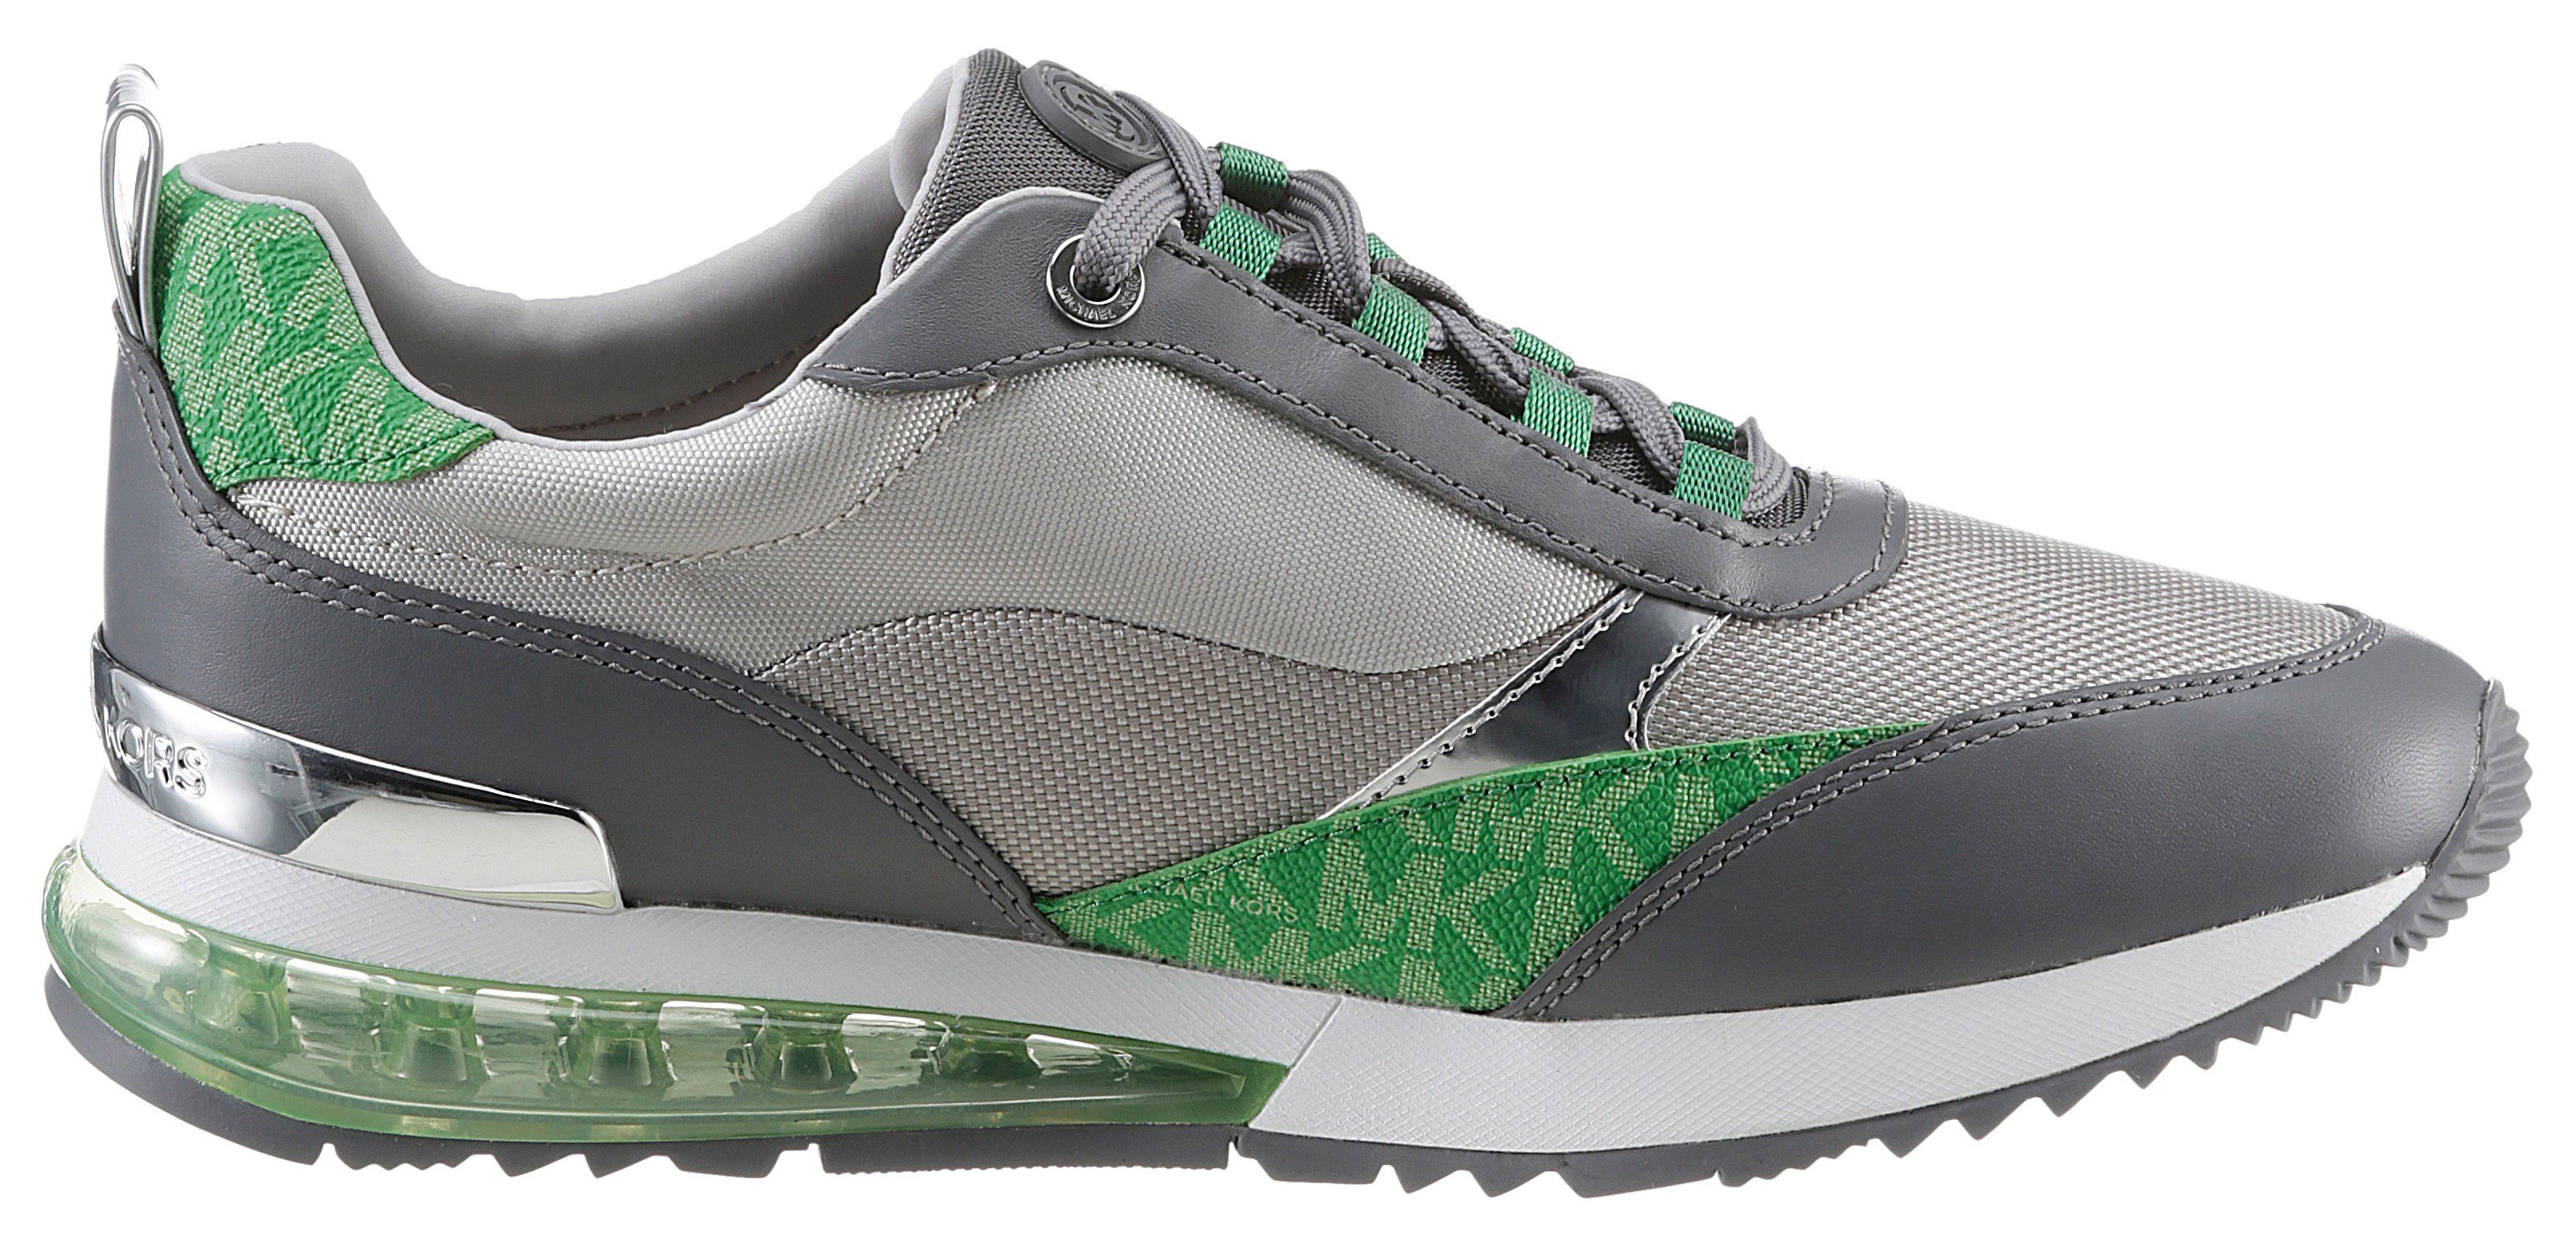 STRIDE ALLIE EXTREME Sneaker mit grau-grün MICHAEL Logoschrifzug KORS